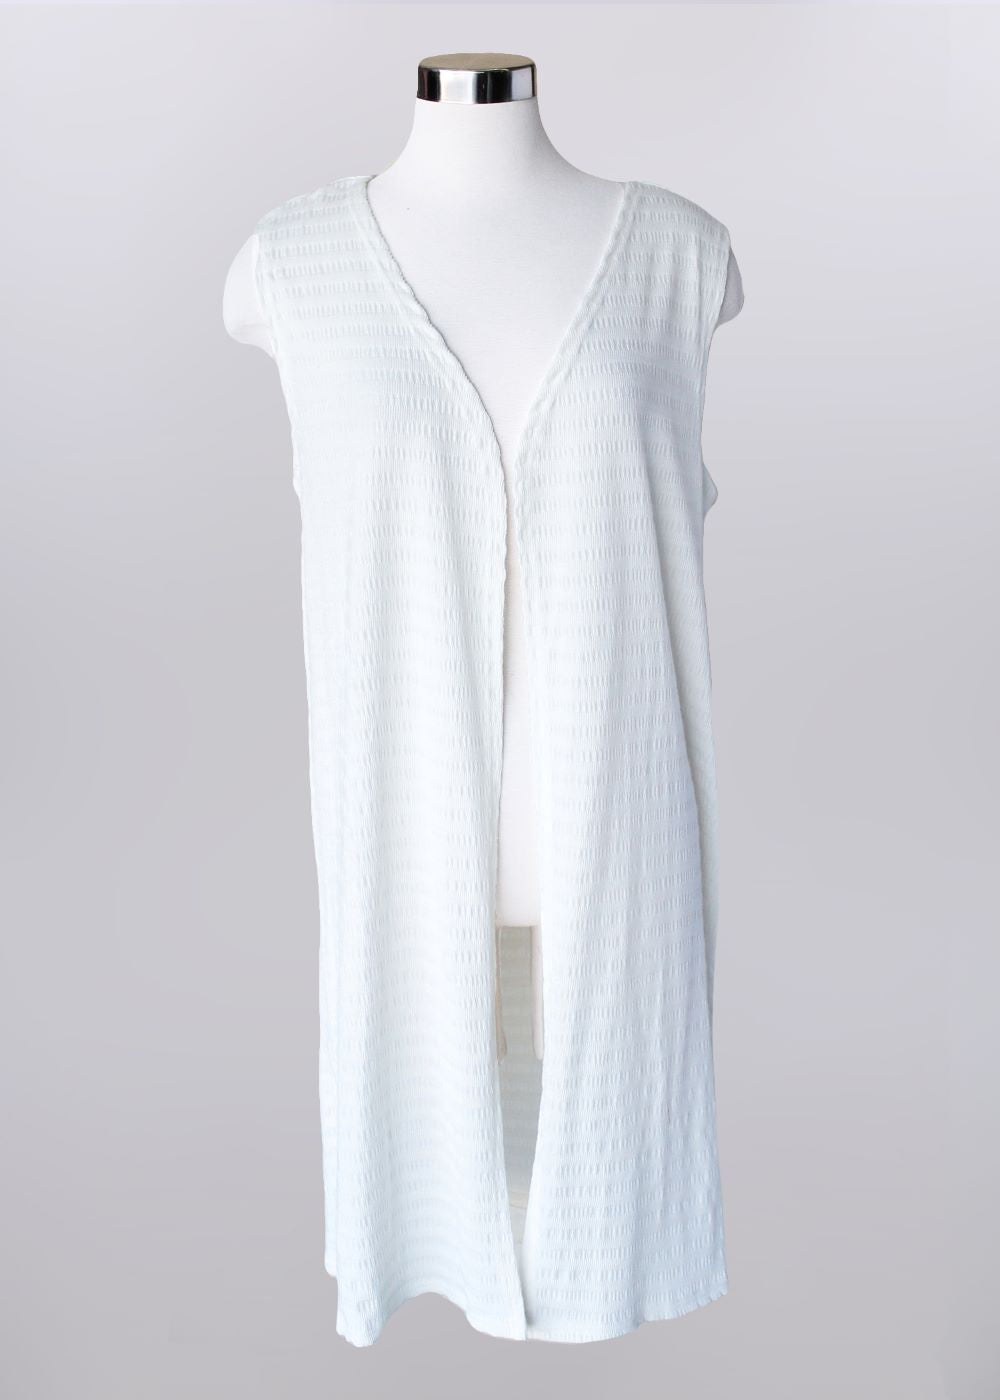 'Keren Hart' Women's Knit Vest - Ivory